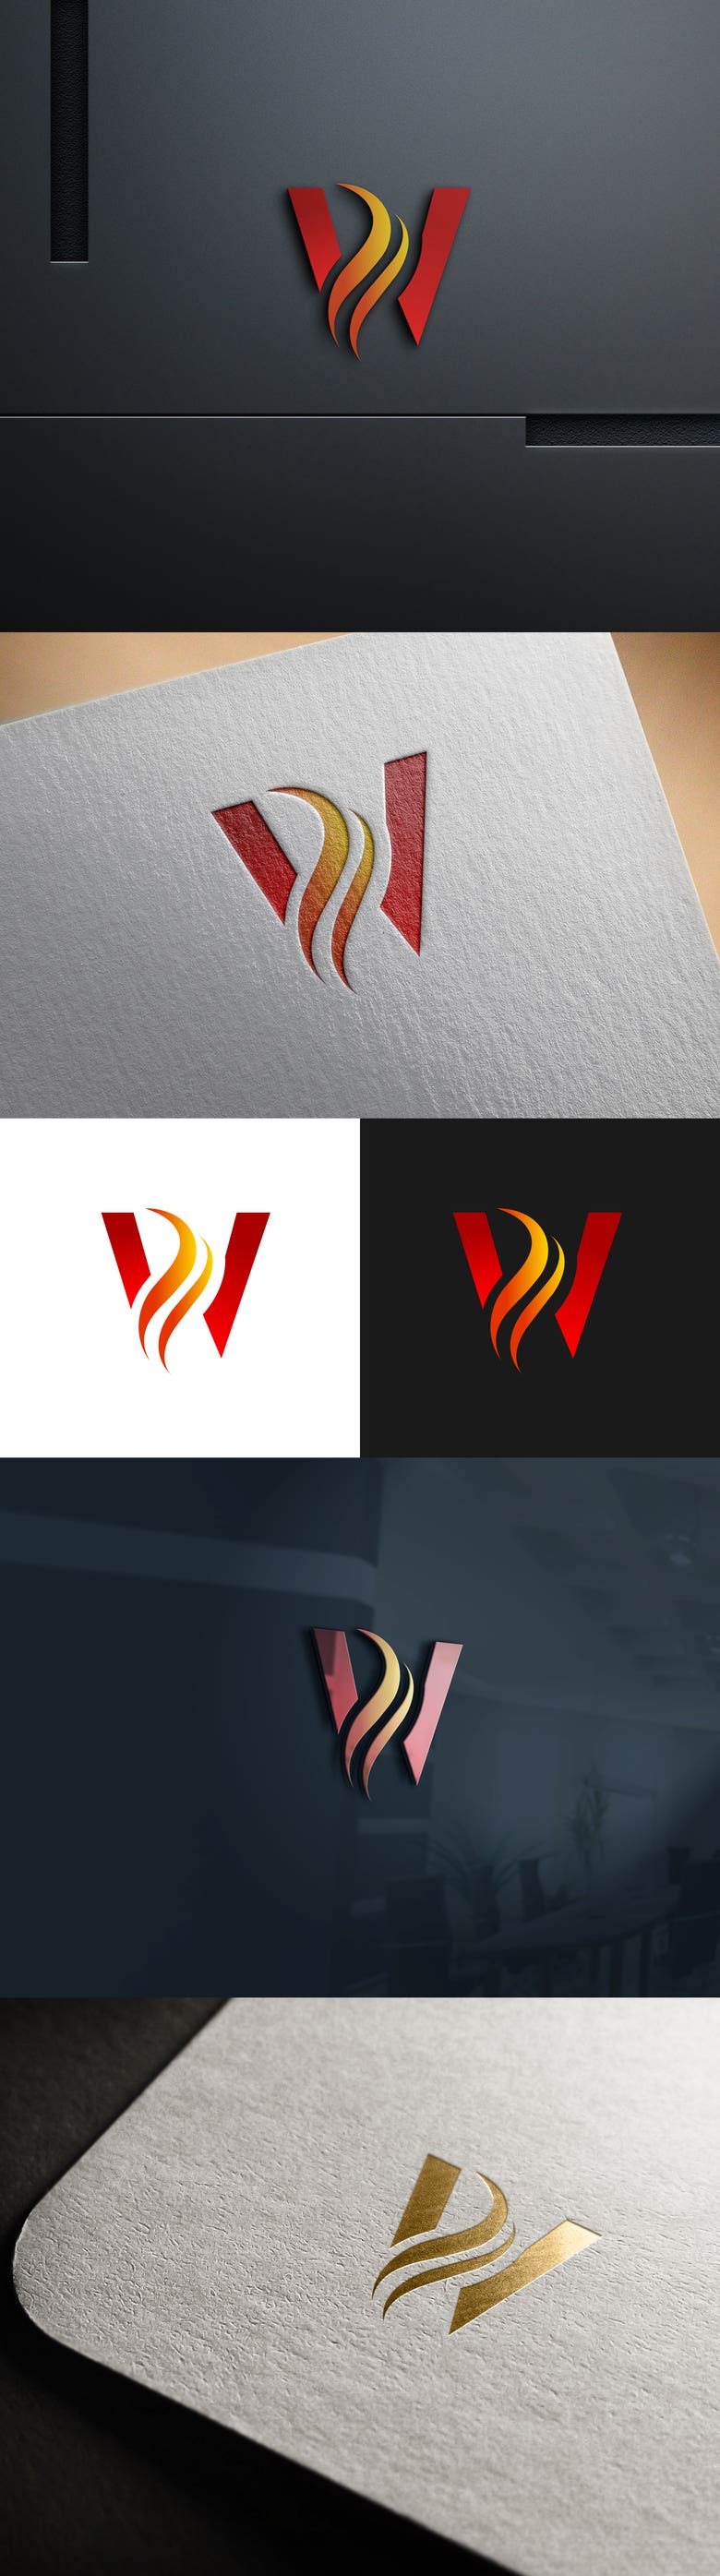 W letter logo